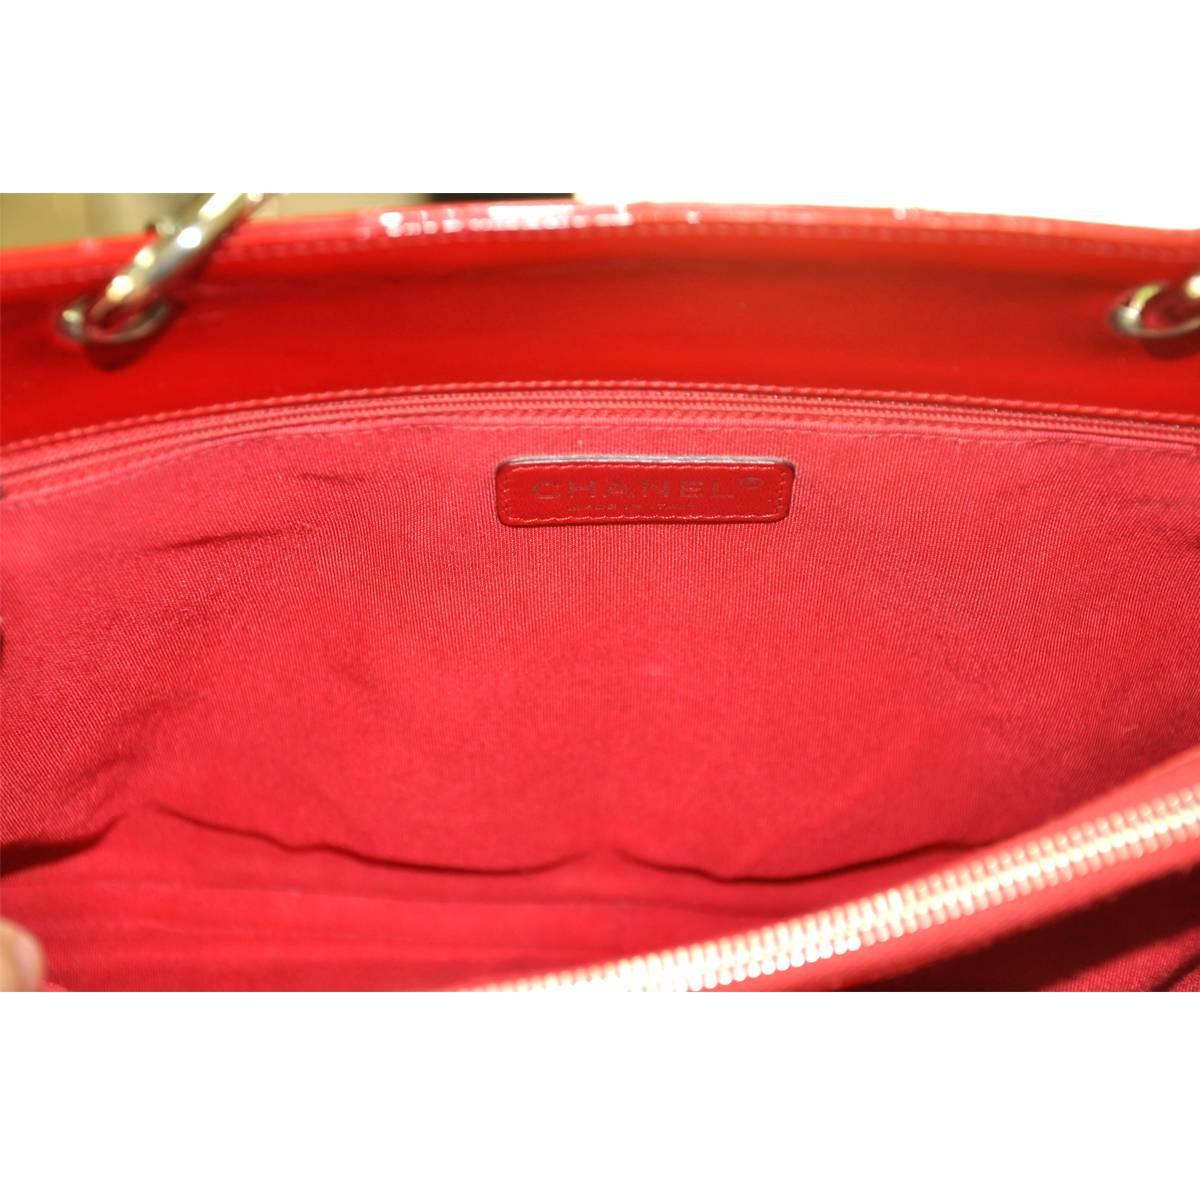 Chanel Red Patent Leather Grand Shopper Tote GST Handbag 5